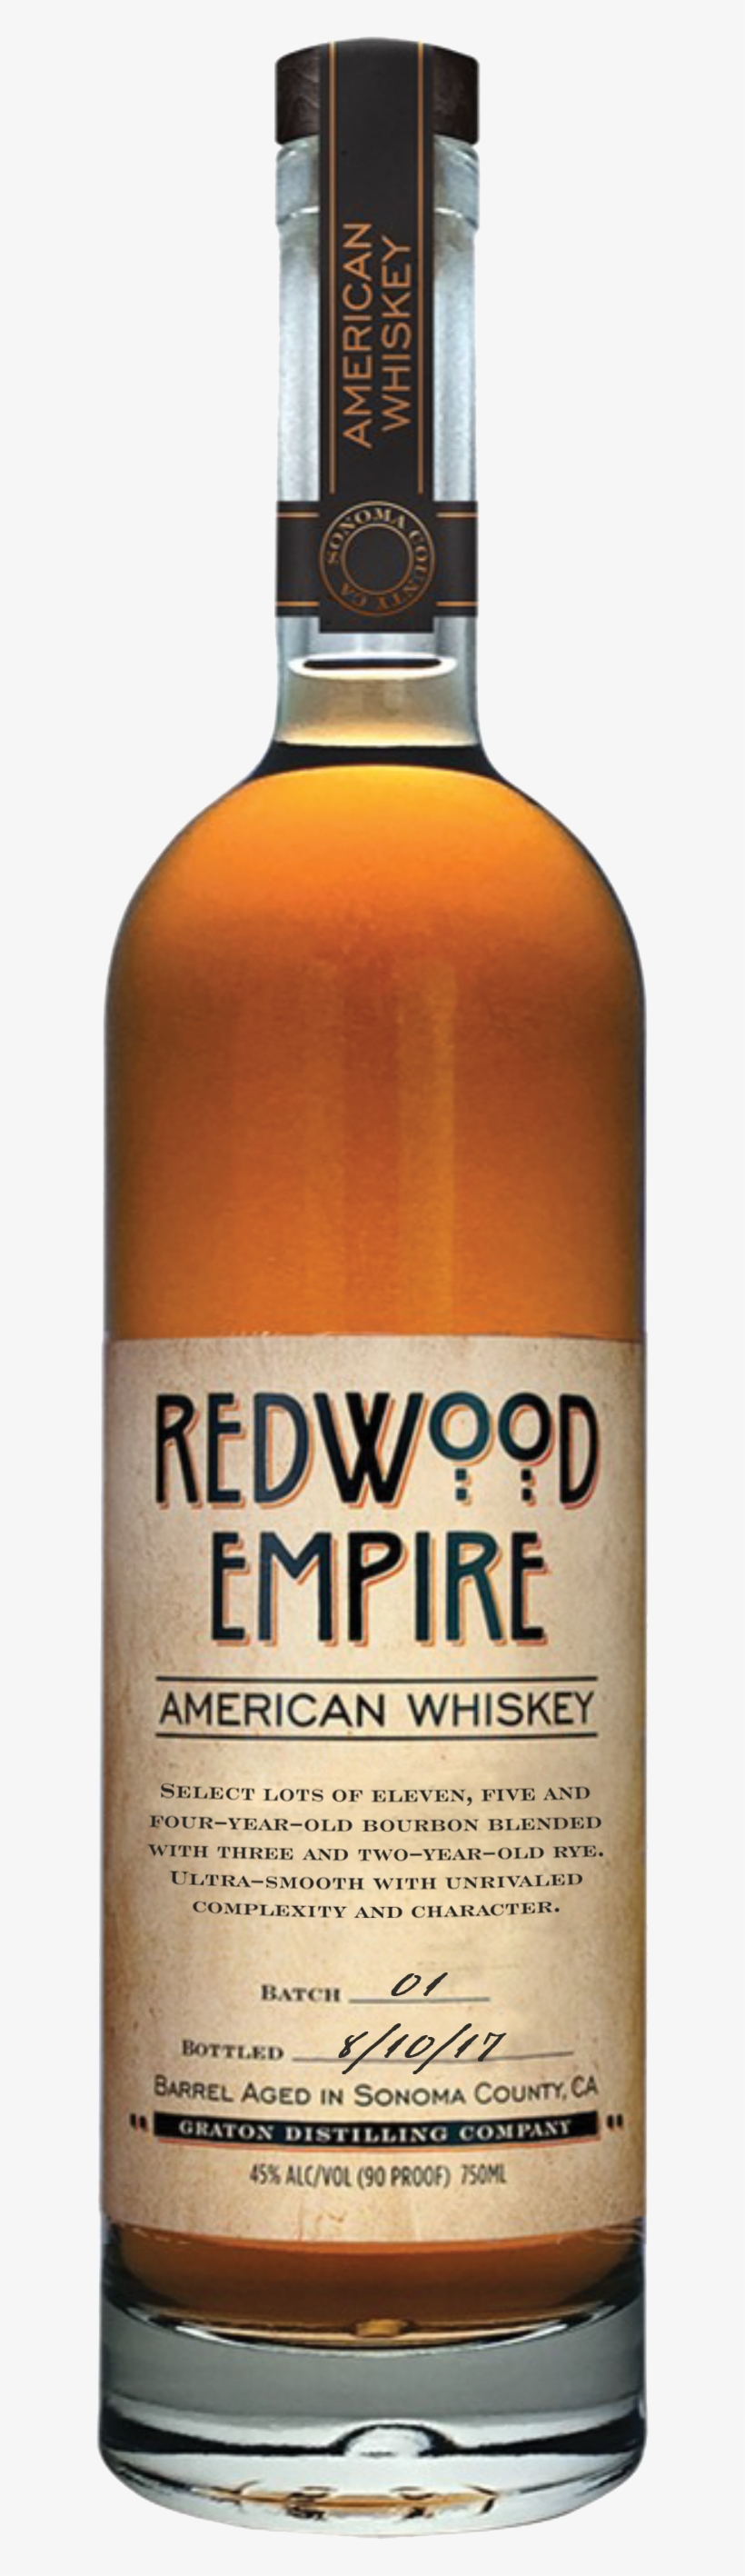 Rwe Amer Whiskey Bottle - Redwood Empire American Whiskey, transparent png #2470357